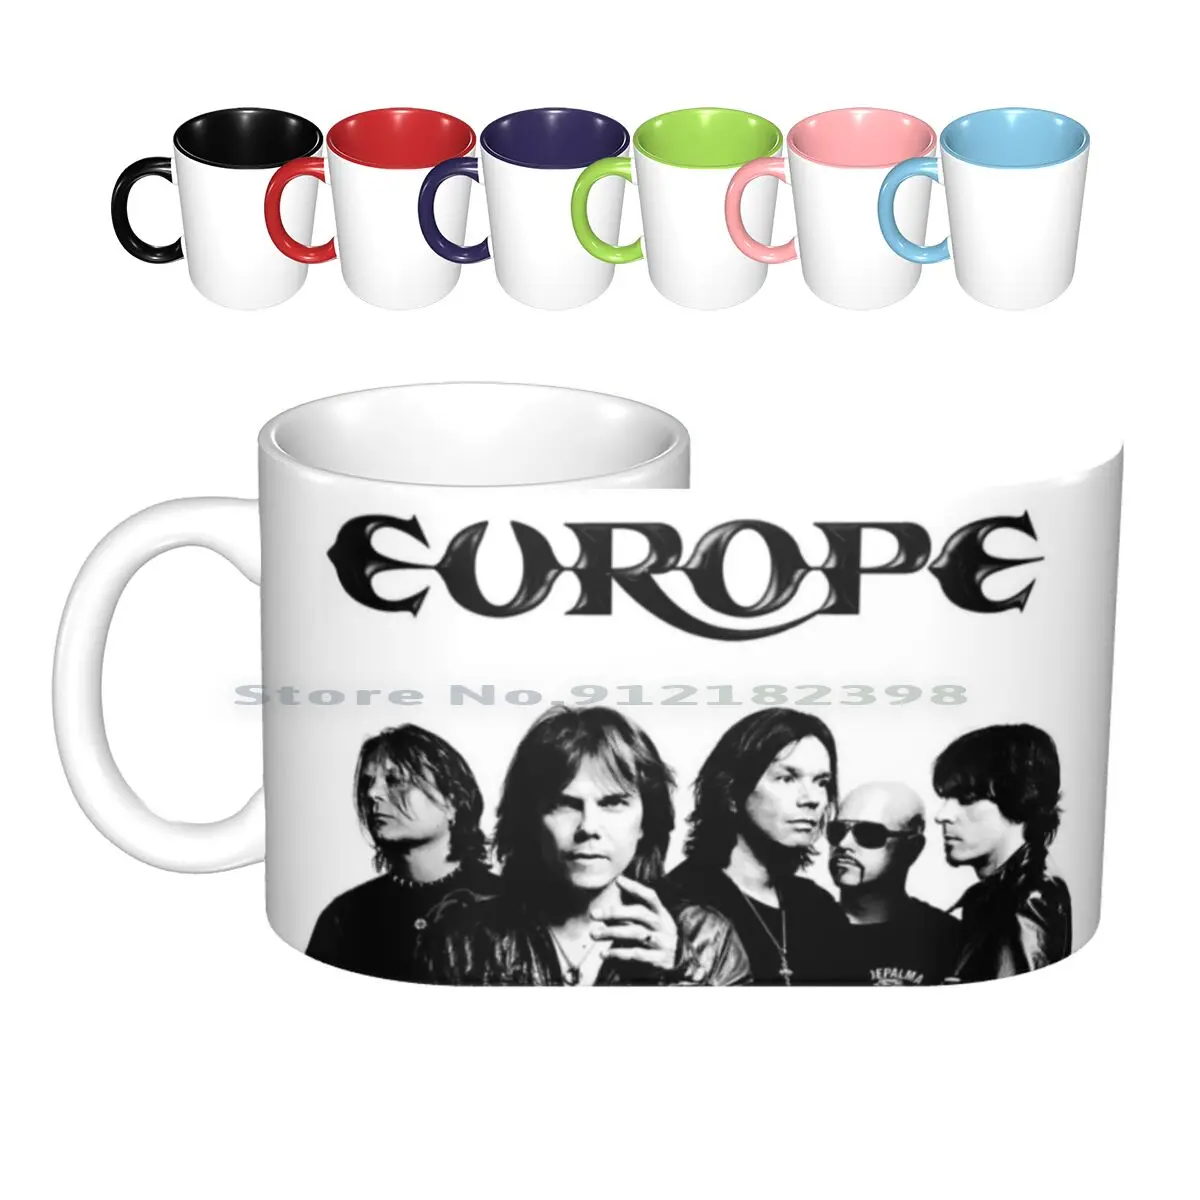 

Trieb Europe Band War Of Kings Ceramic Mugs Coffee Cups Milk Tea Mug Live Concert War Of Kings Europe Band Tour 2021 2022 2020